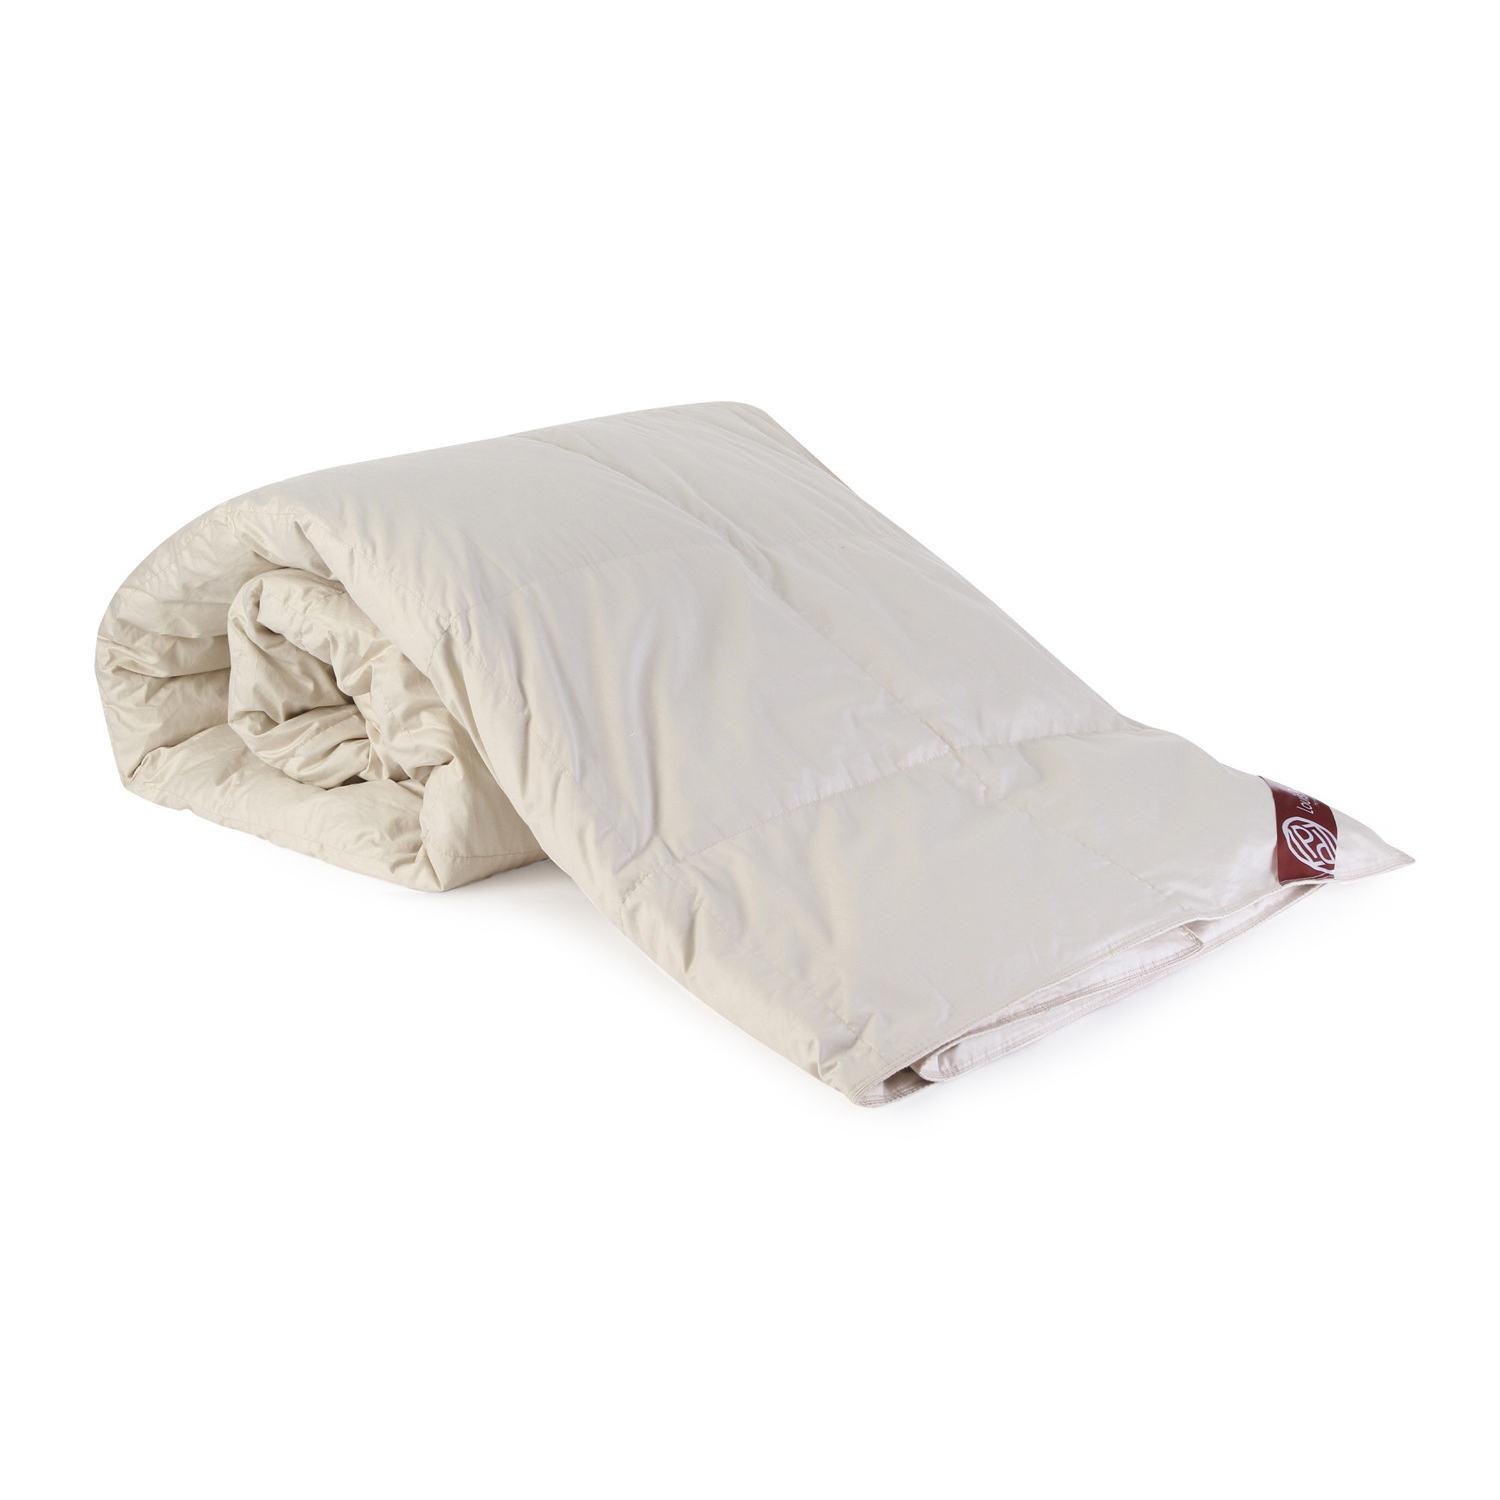 пуховое одеяло louis pascal камилла белое 200х220 см лп2034 Пуховое одеяло Louis Pascal Николь бежевое 200х220 см (ЛП2022)